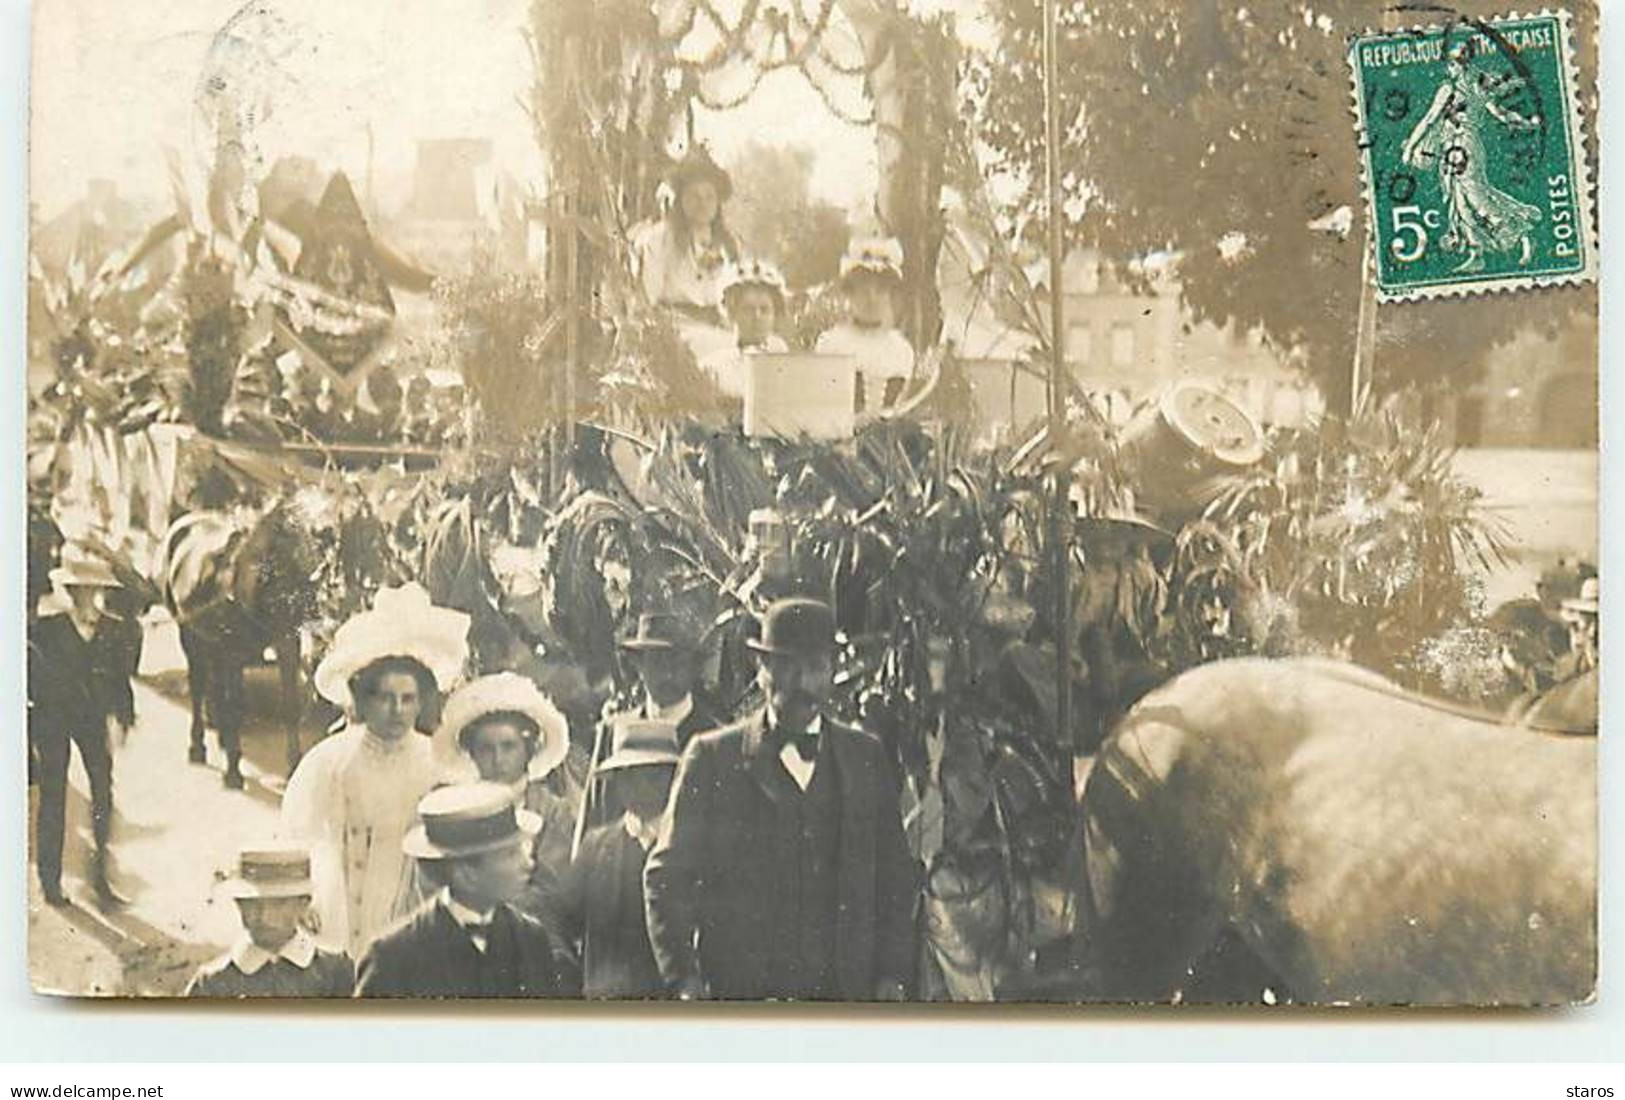 Carte Photo - VILLAINES LA JUHEL - Cavalcade 1910 - Villaines La Juhel